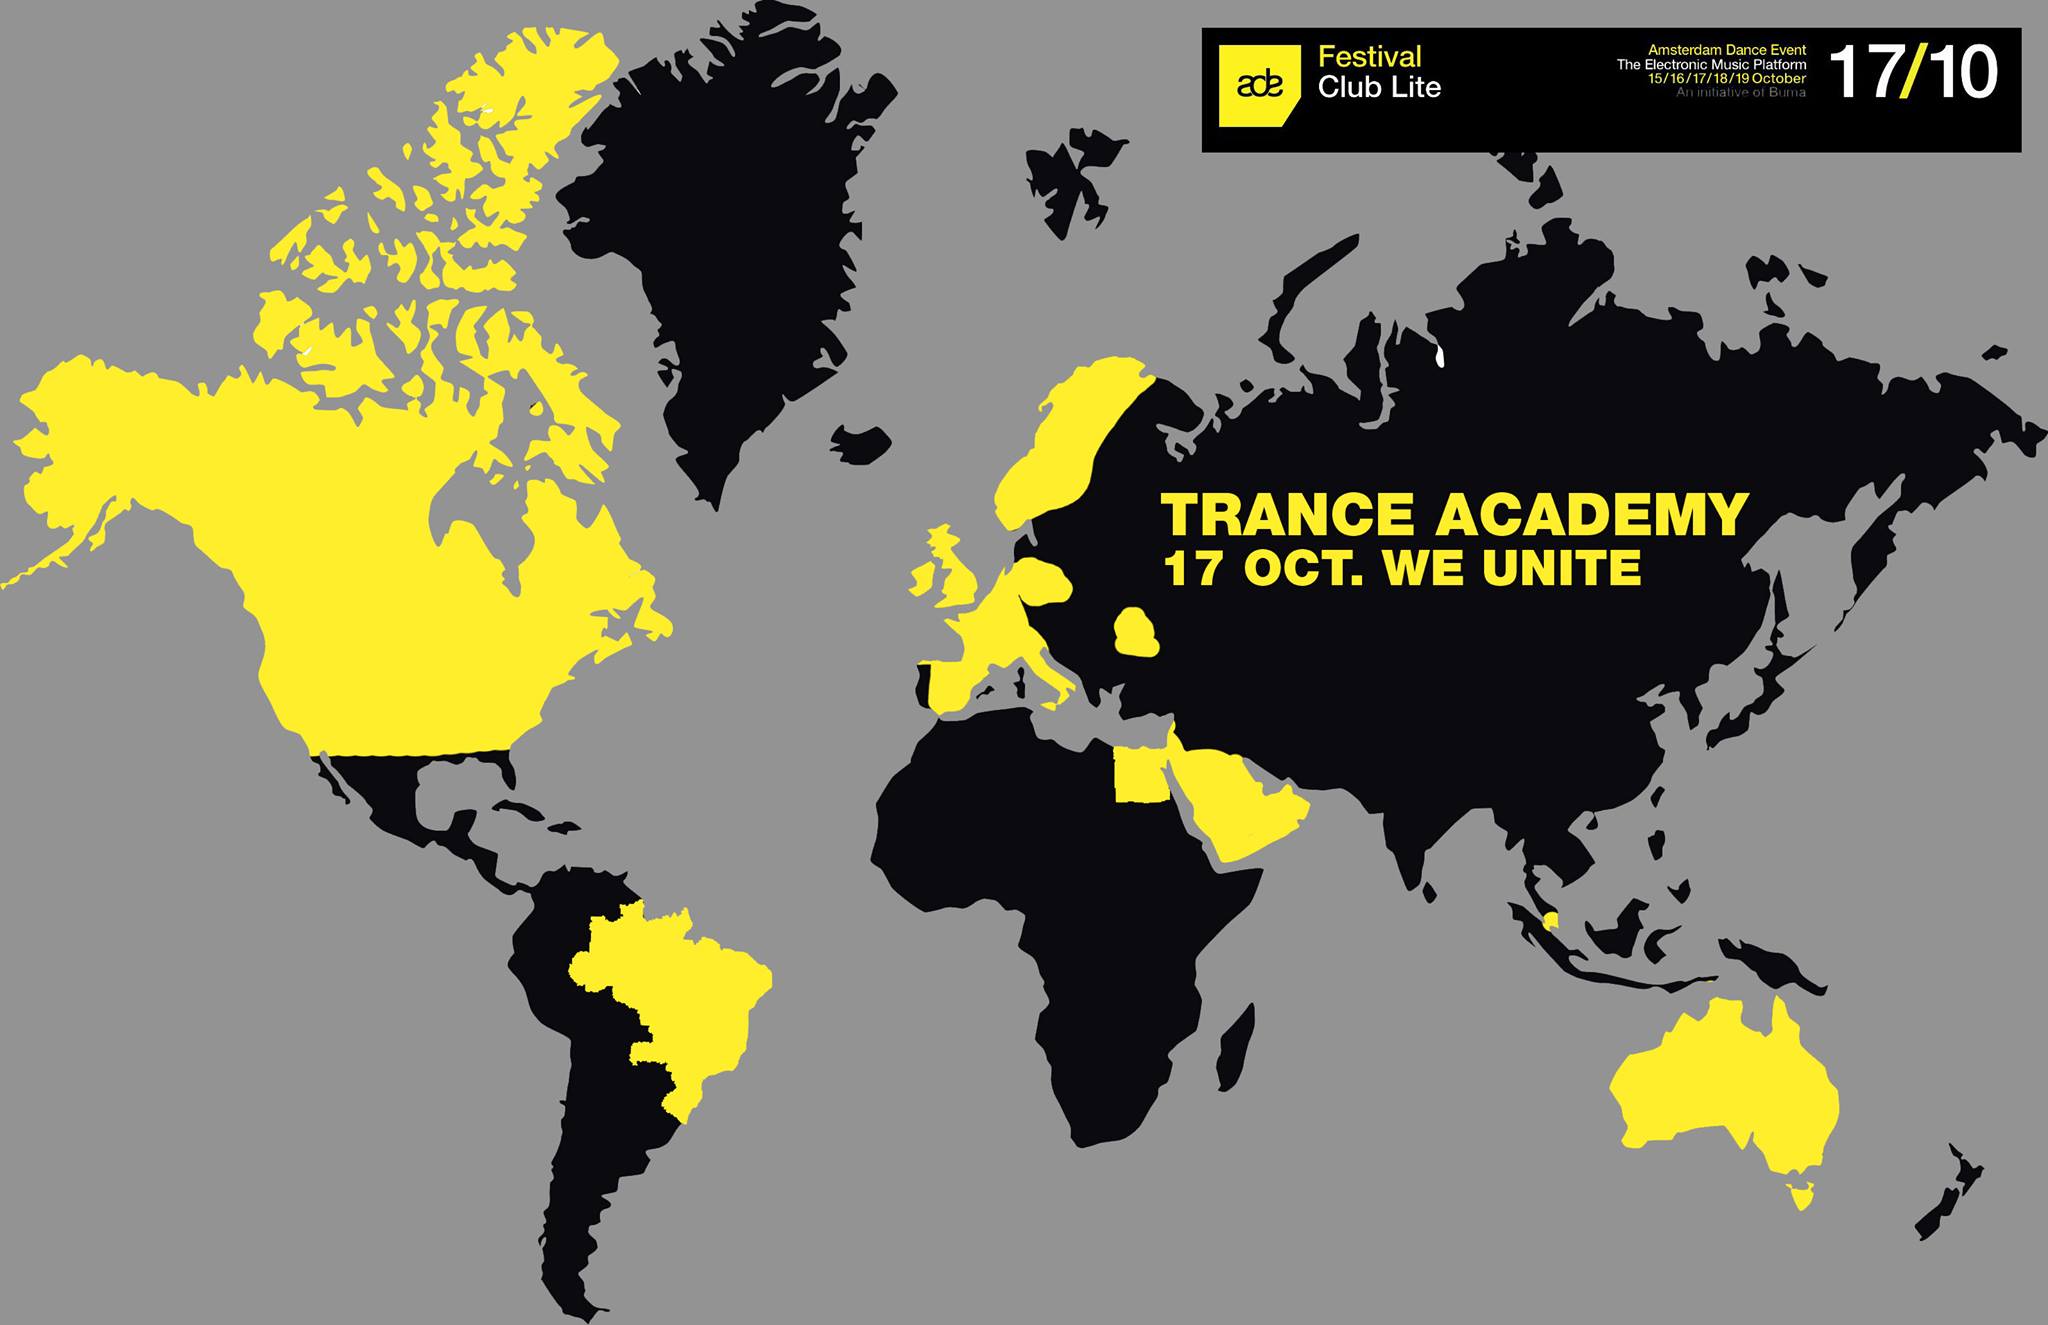 Trance Academy Unite